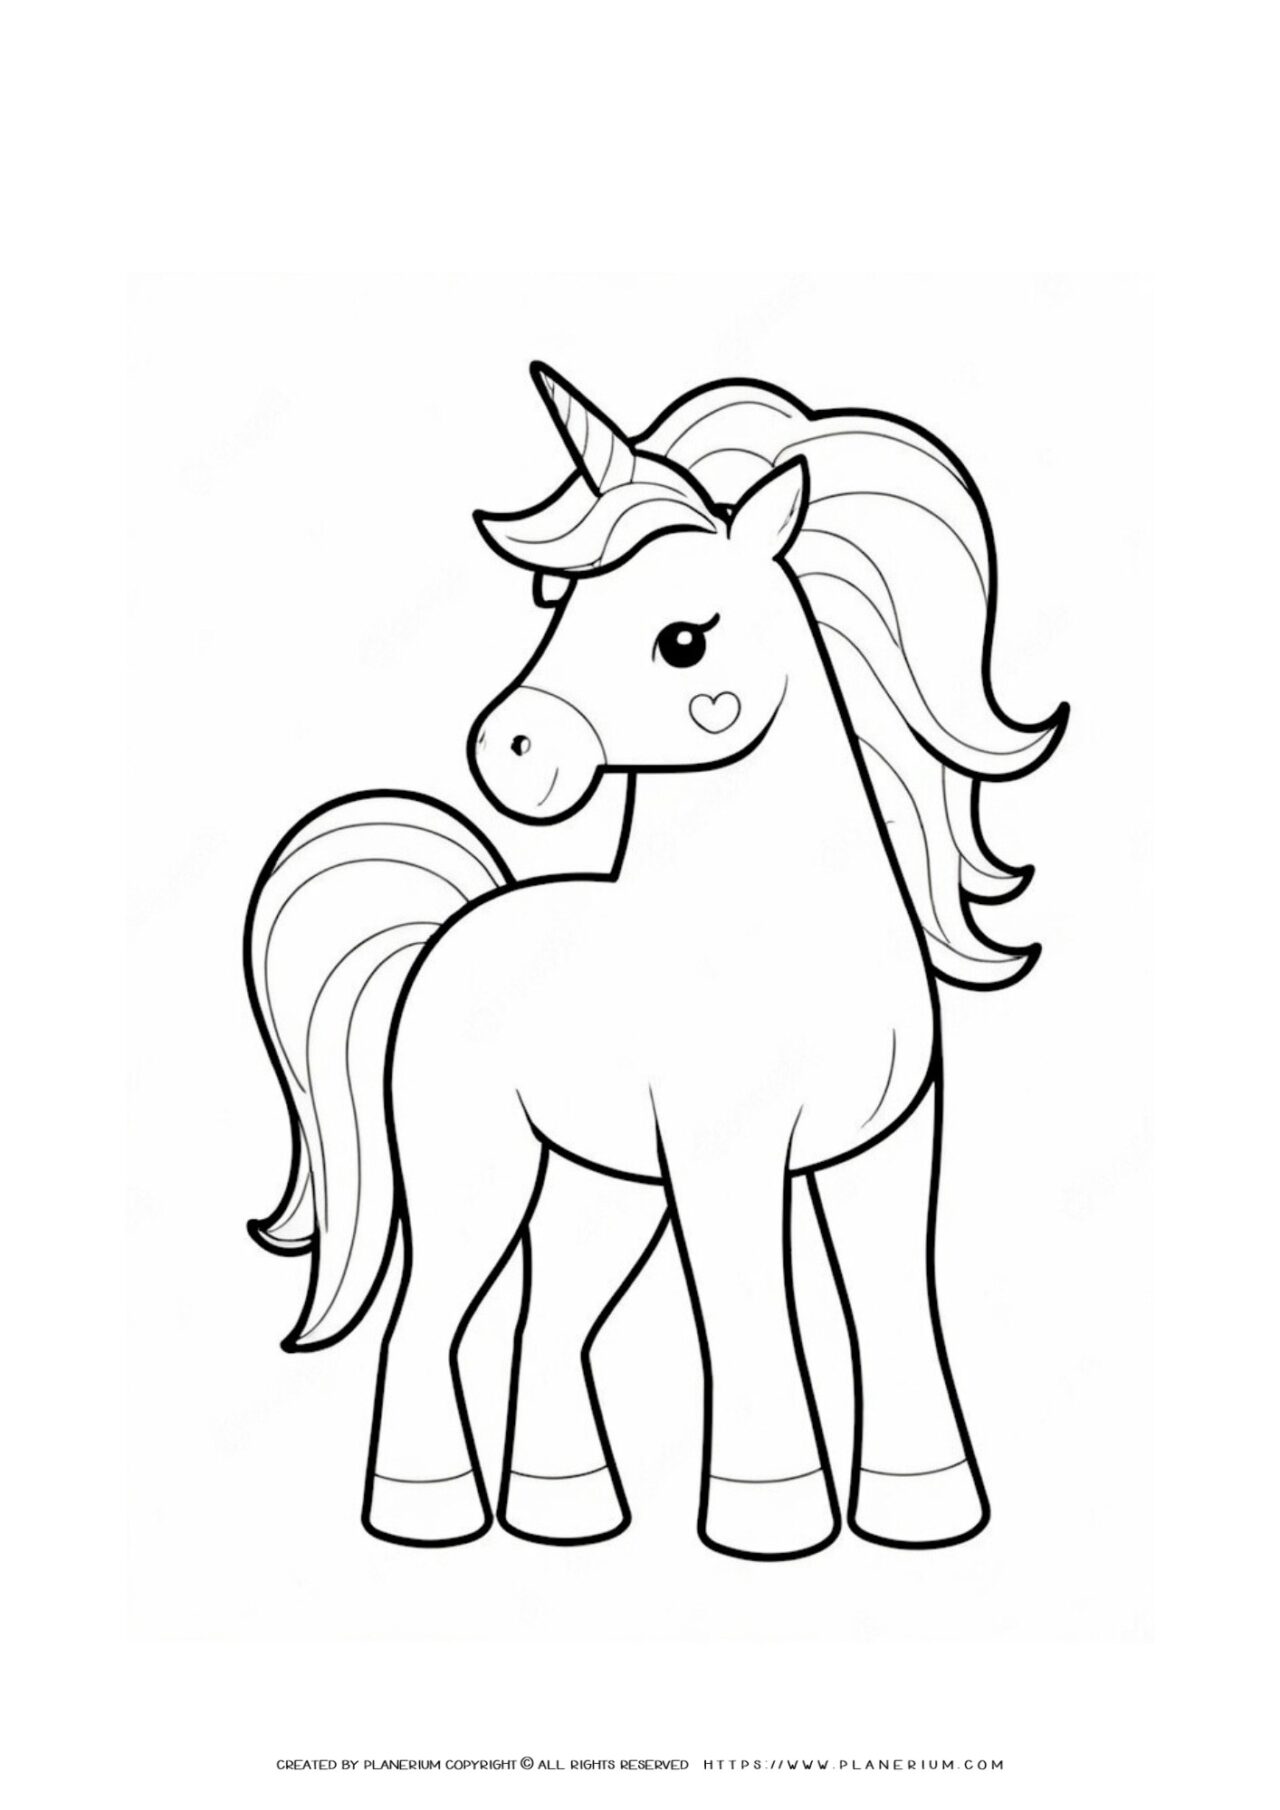 Printable unicorn coloring page for kids.